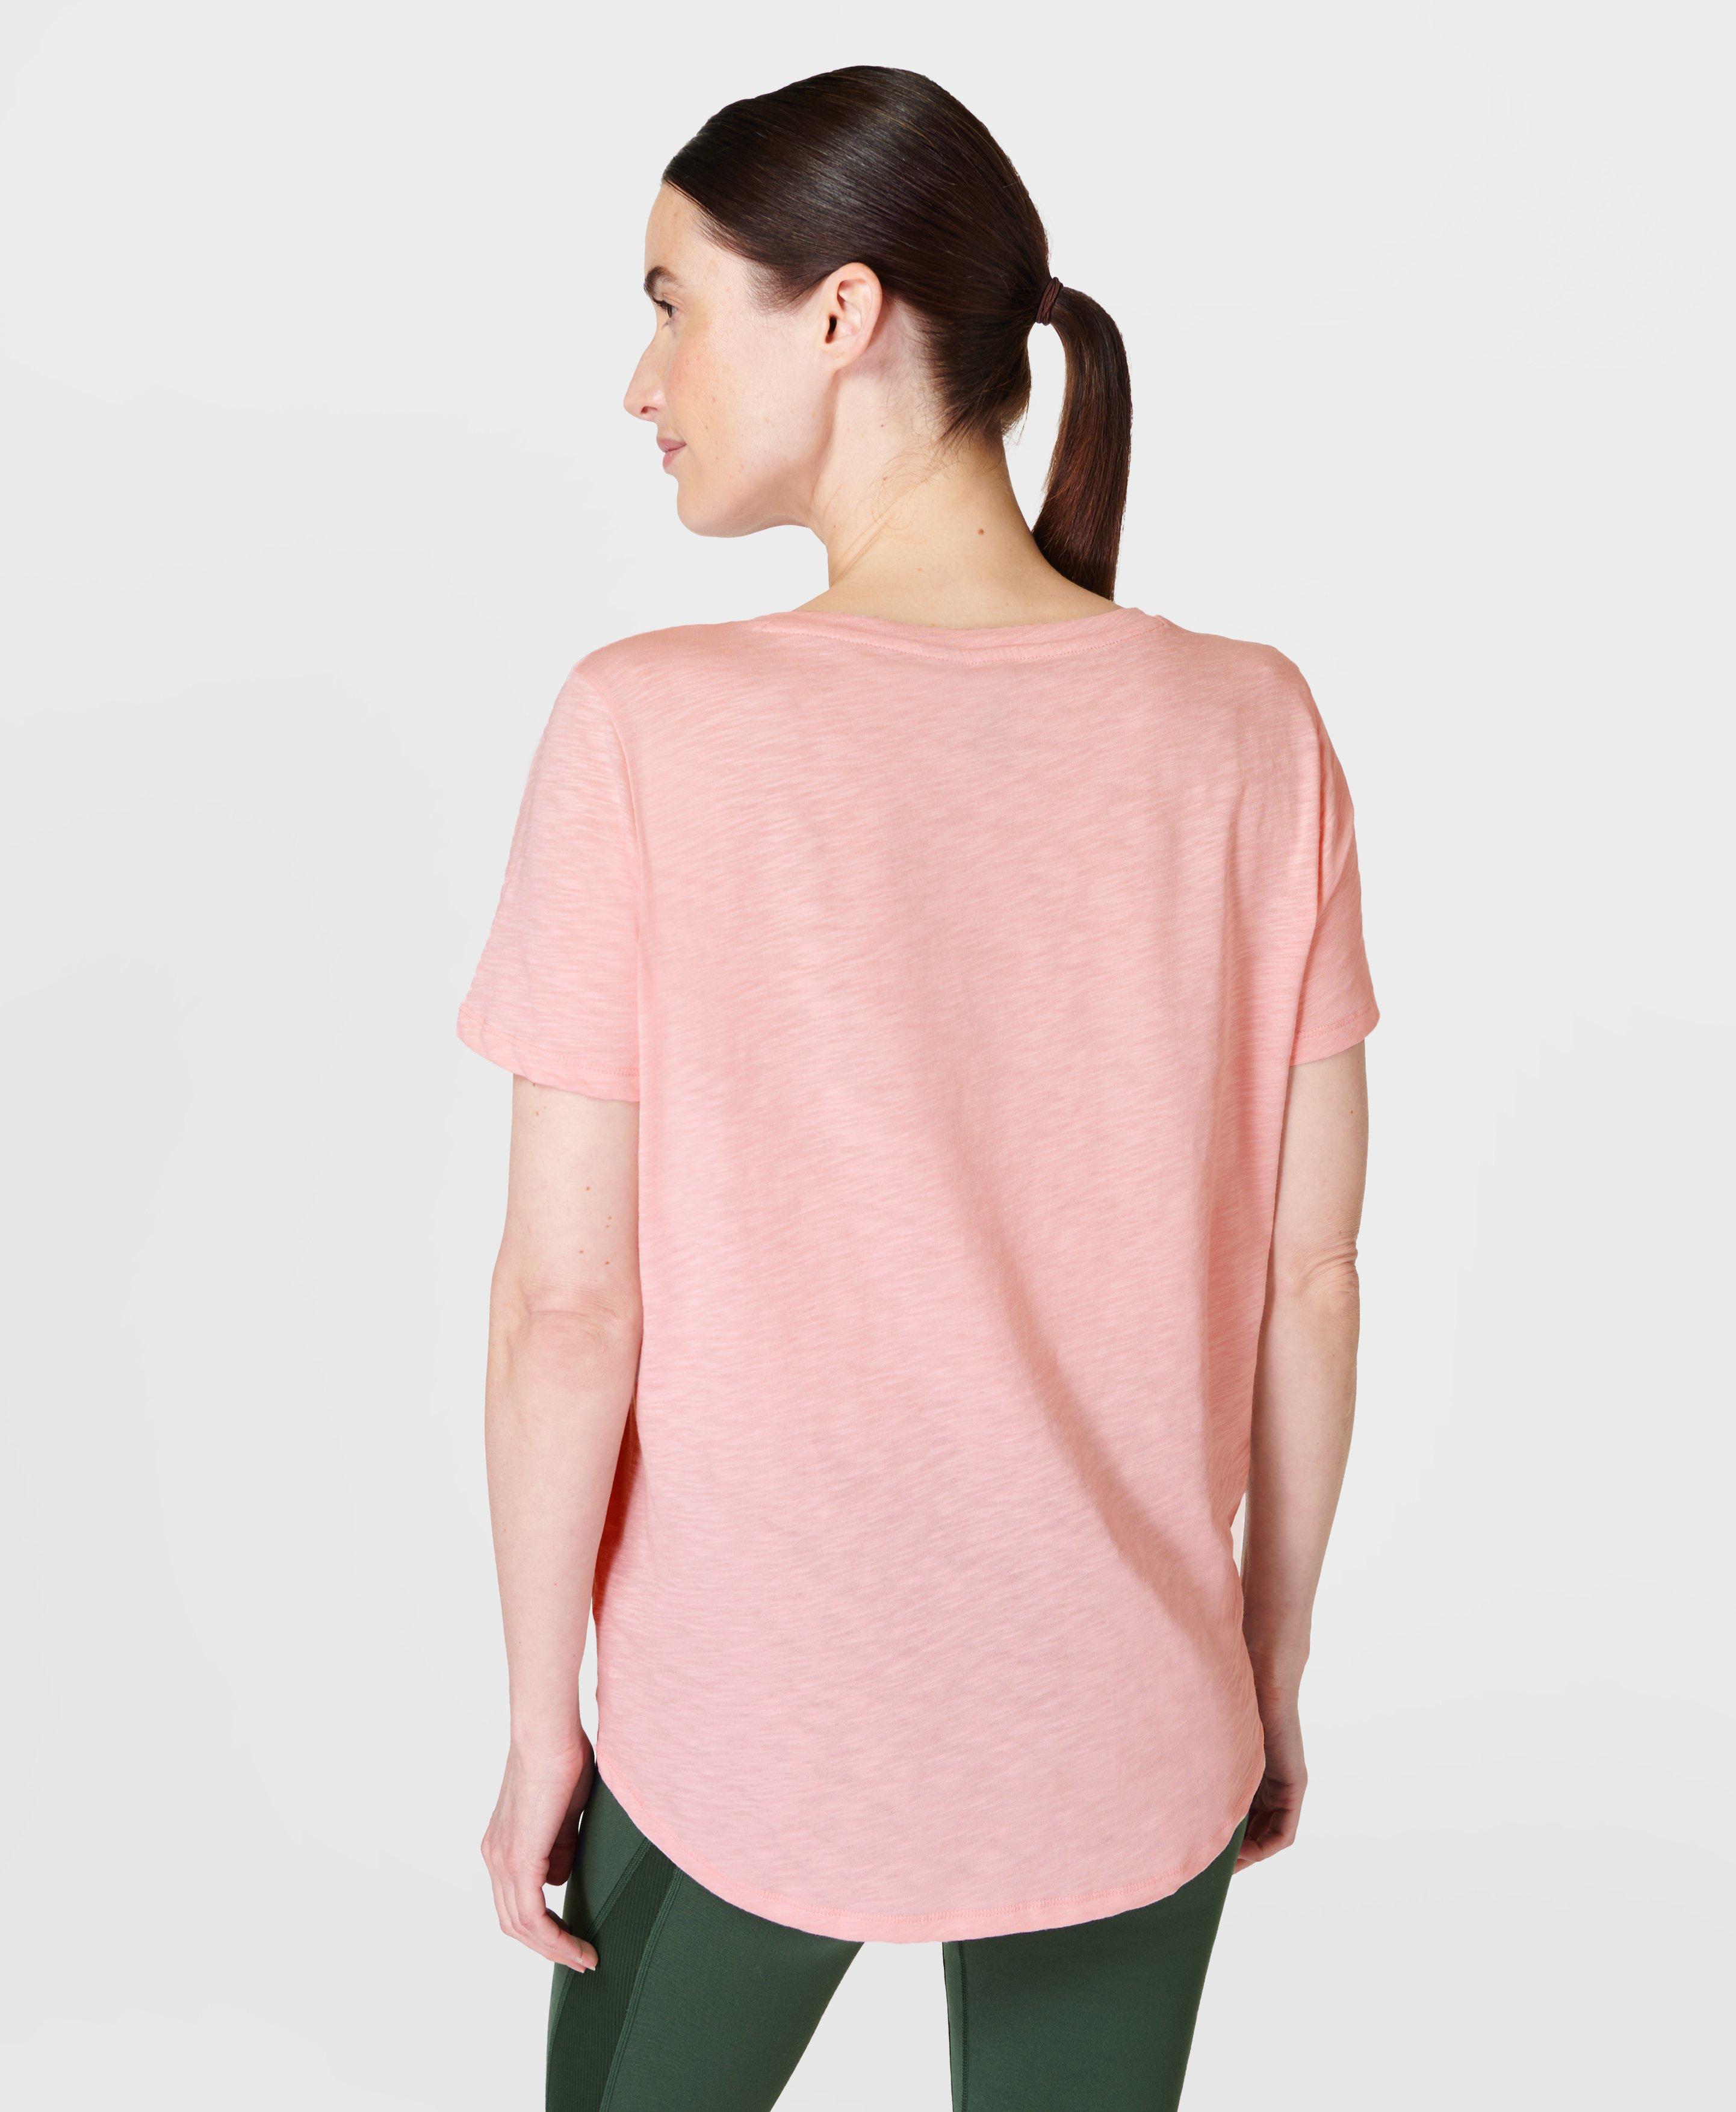 Refresh V-Neck T-Shirt - Soft Pink, Women's T-Shirts